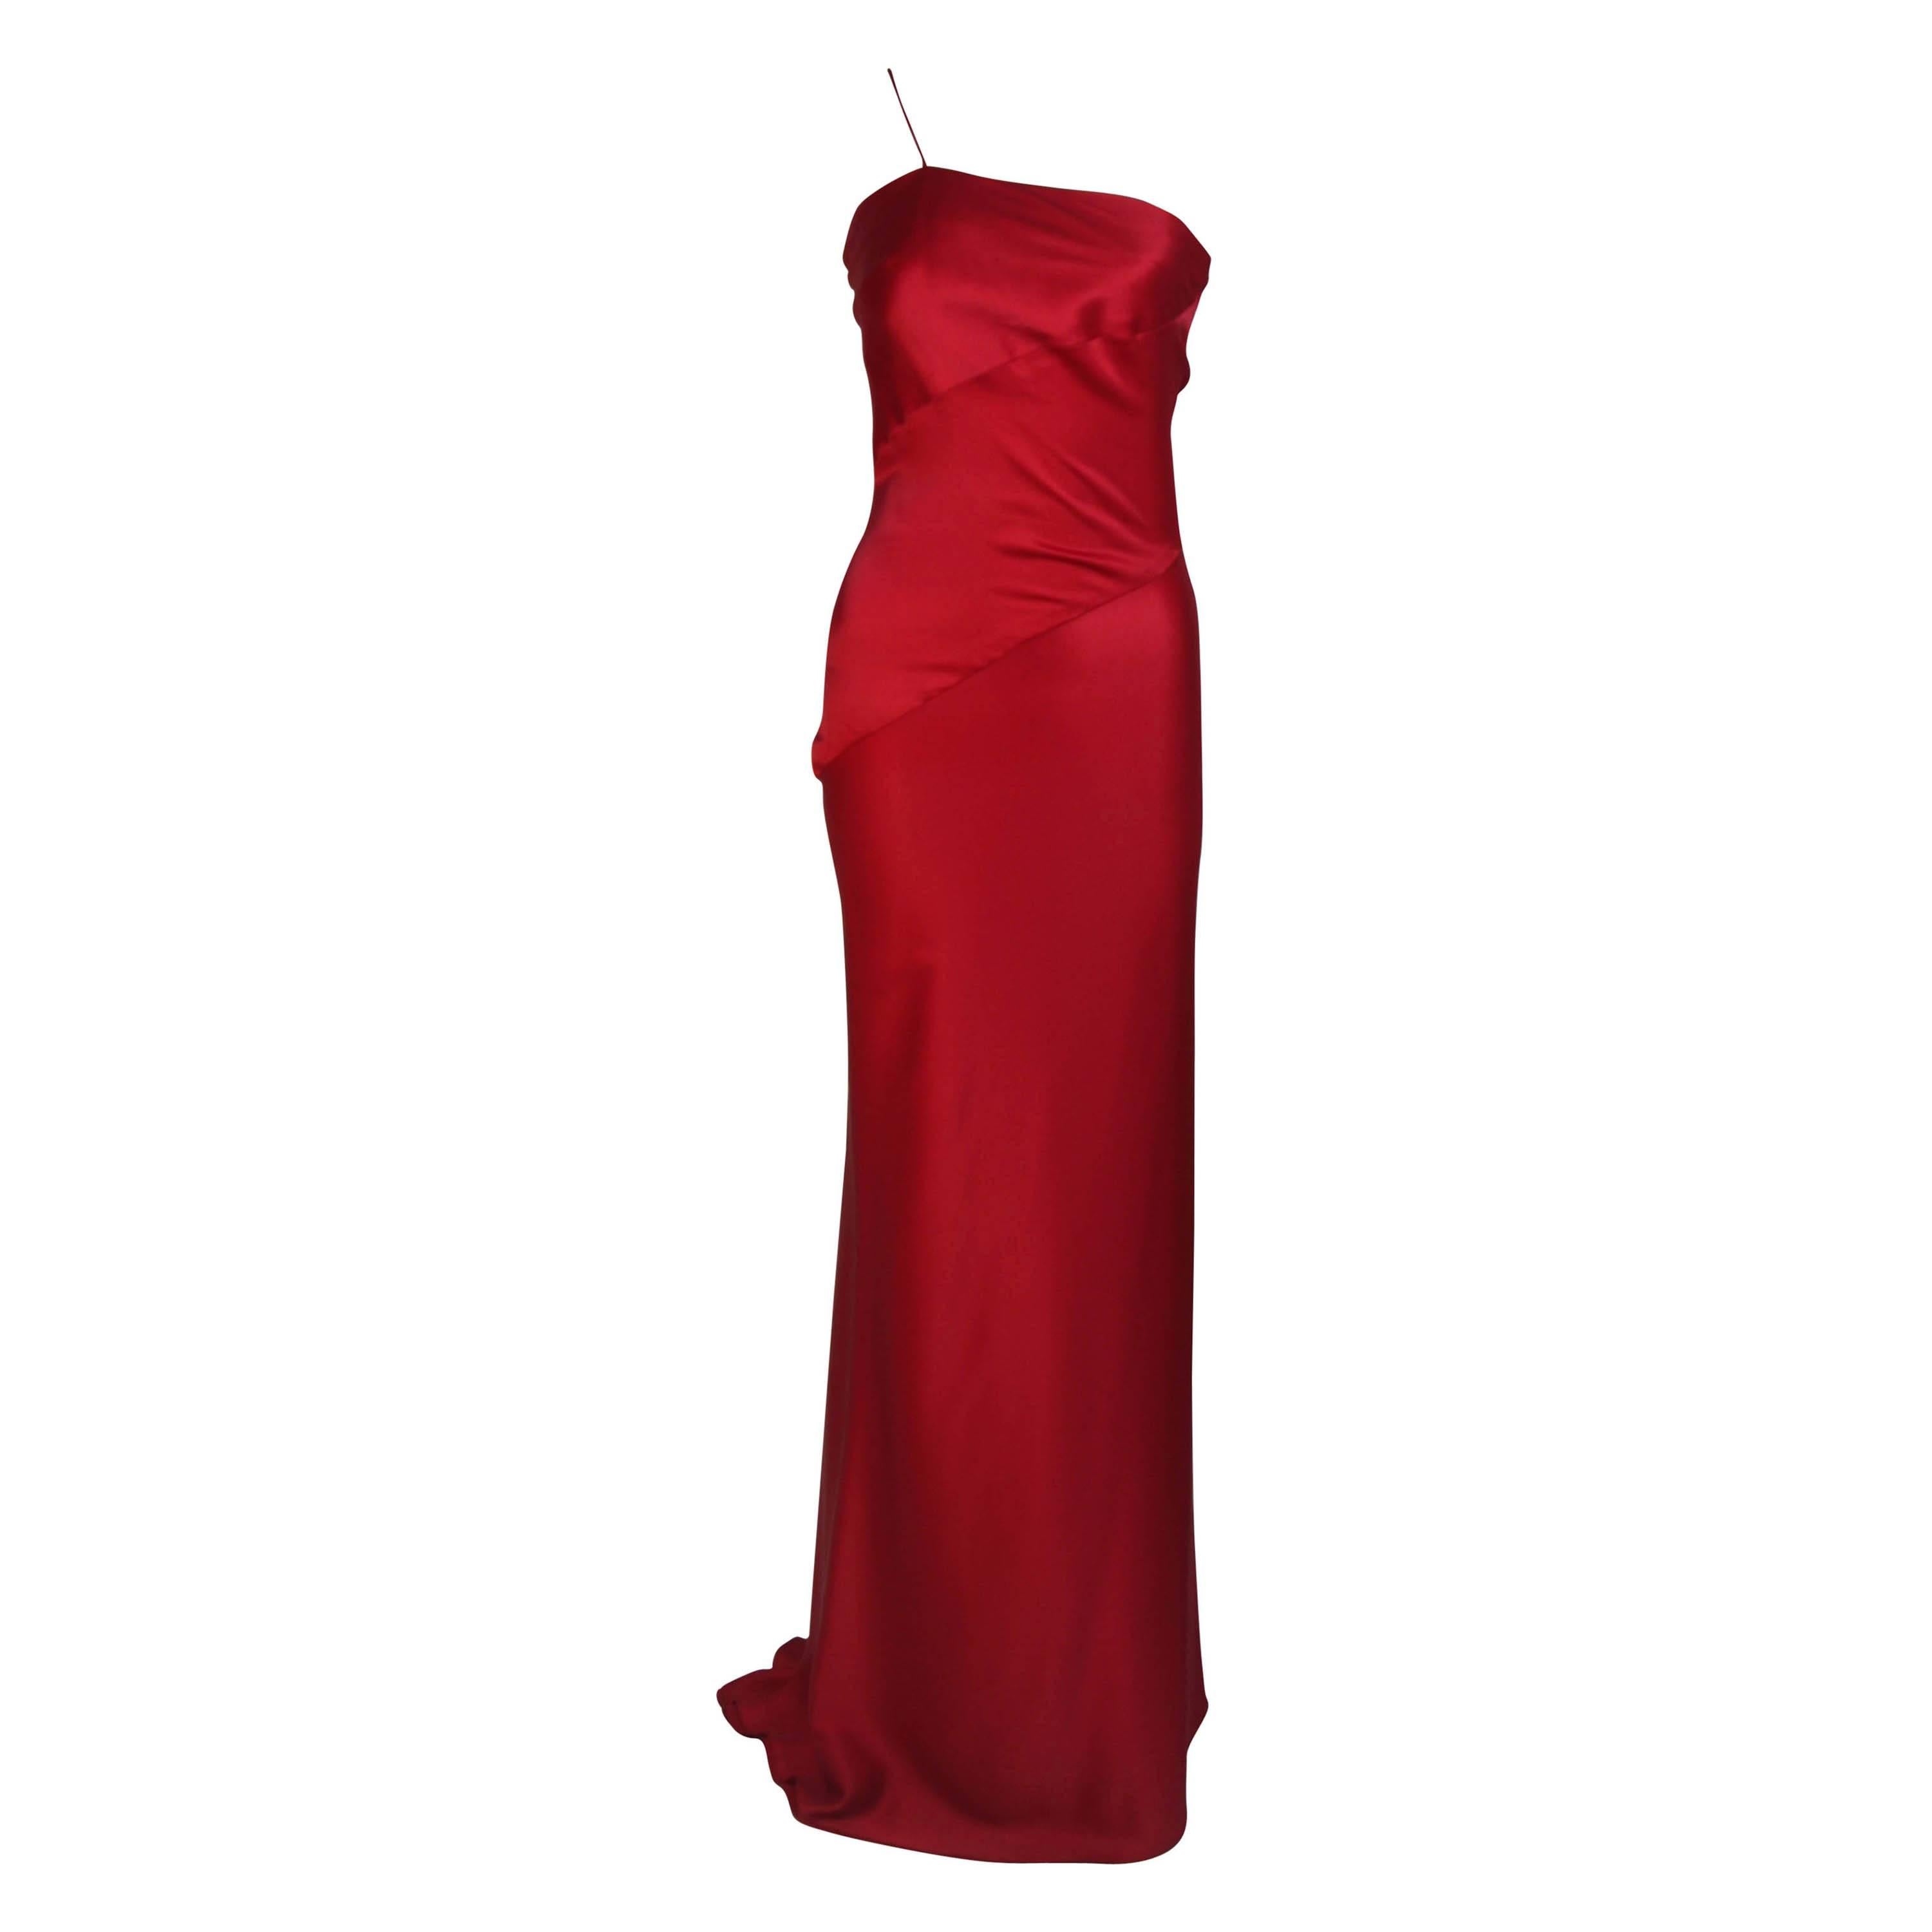 CANTU & CASTILLO Red Silk Bias Cut Asymmetrical Gown Size 2-4 For Sale